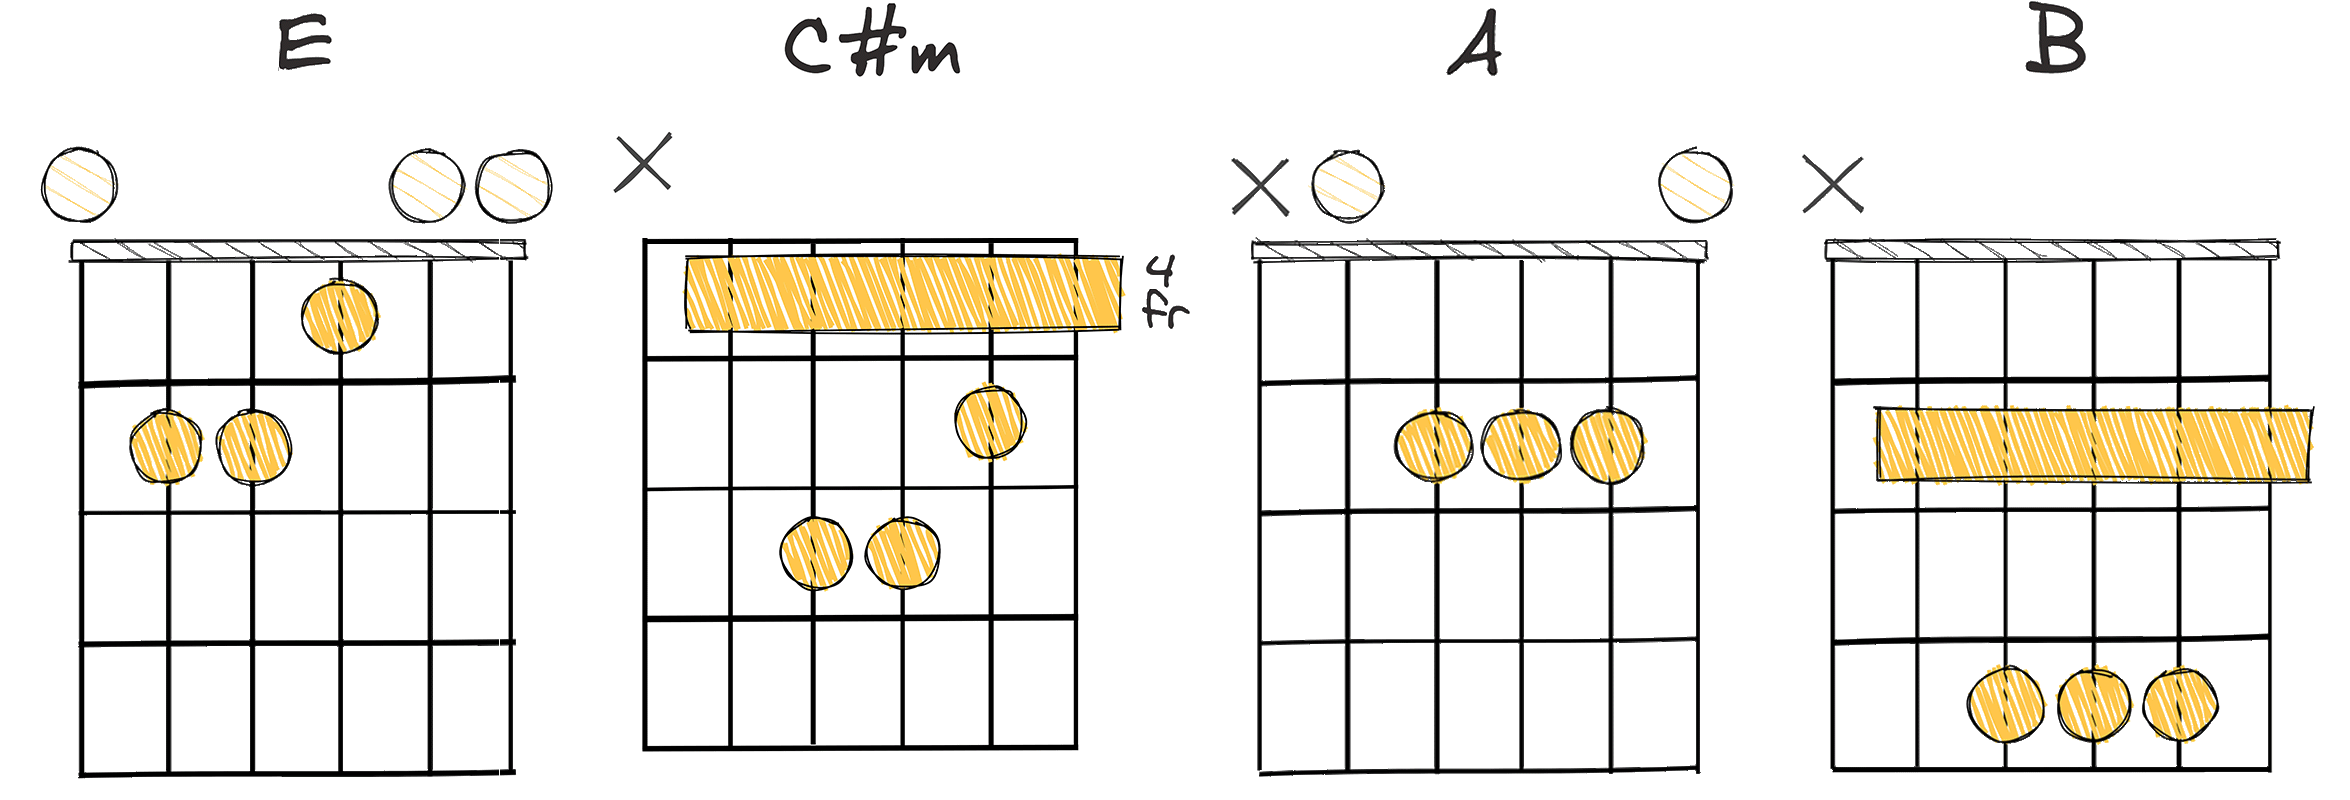 I-vi-IV-V (1-6-4-5) chords diagram